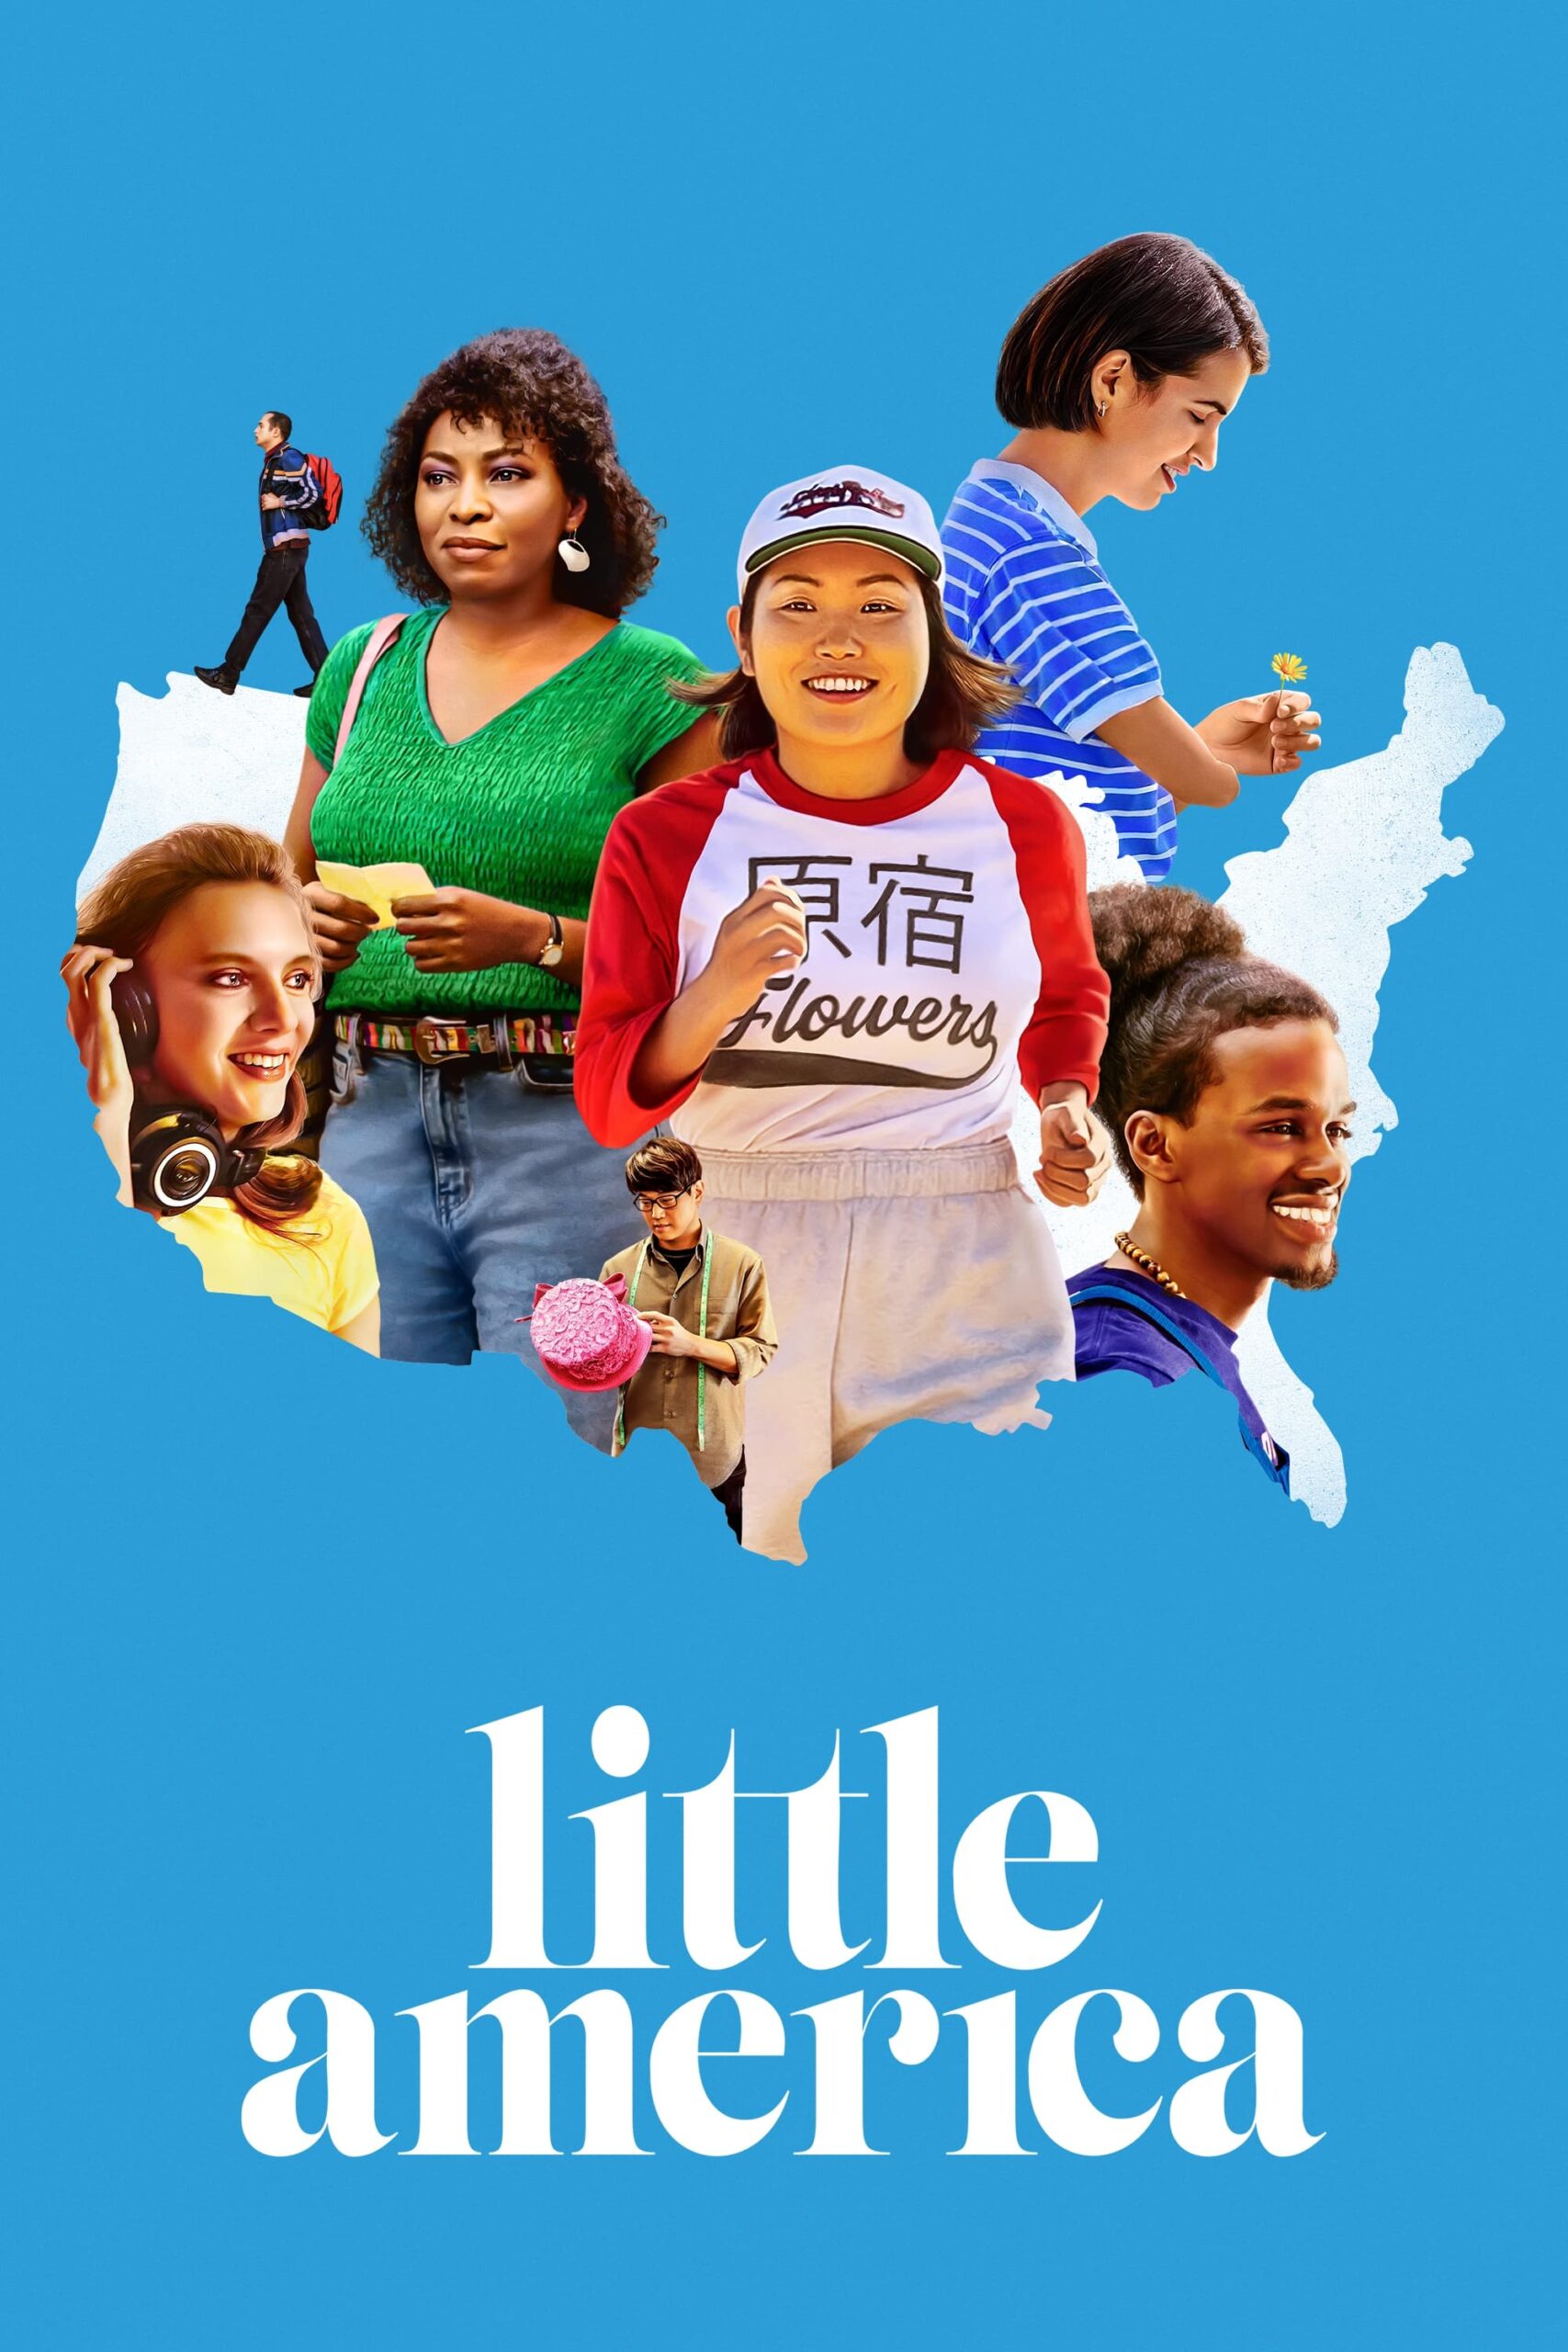 Plakát pro film “Little America”